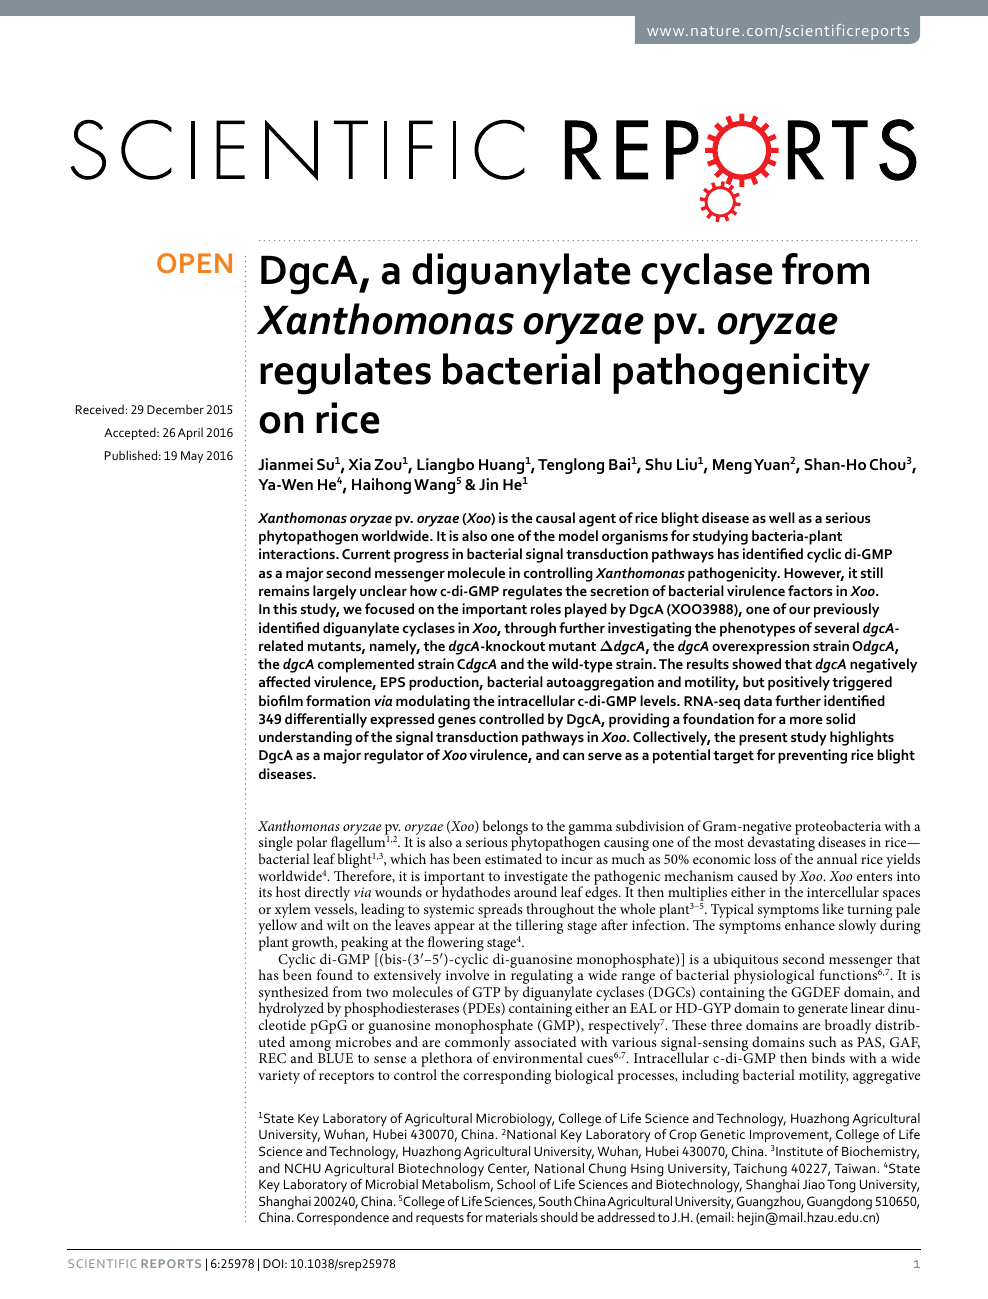 DgcA, a diguanylate cyclase from Xanthomonas oryzae pv. oryzae